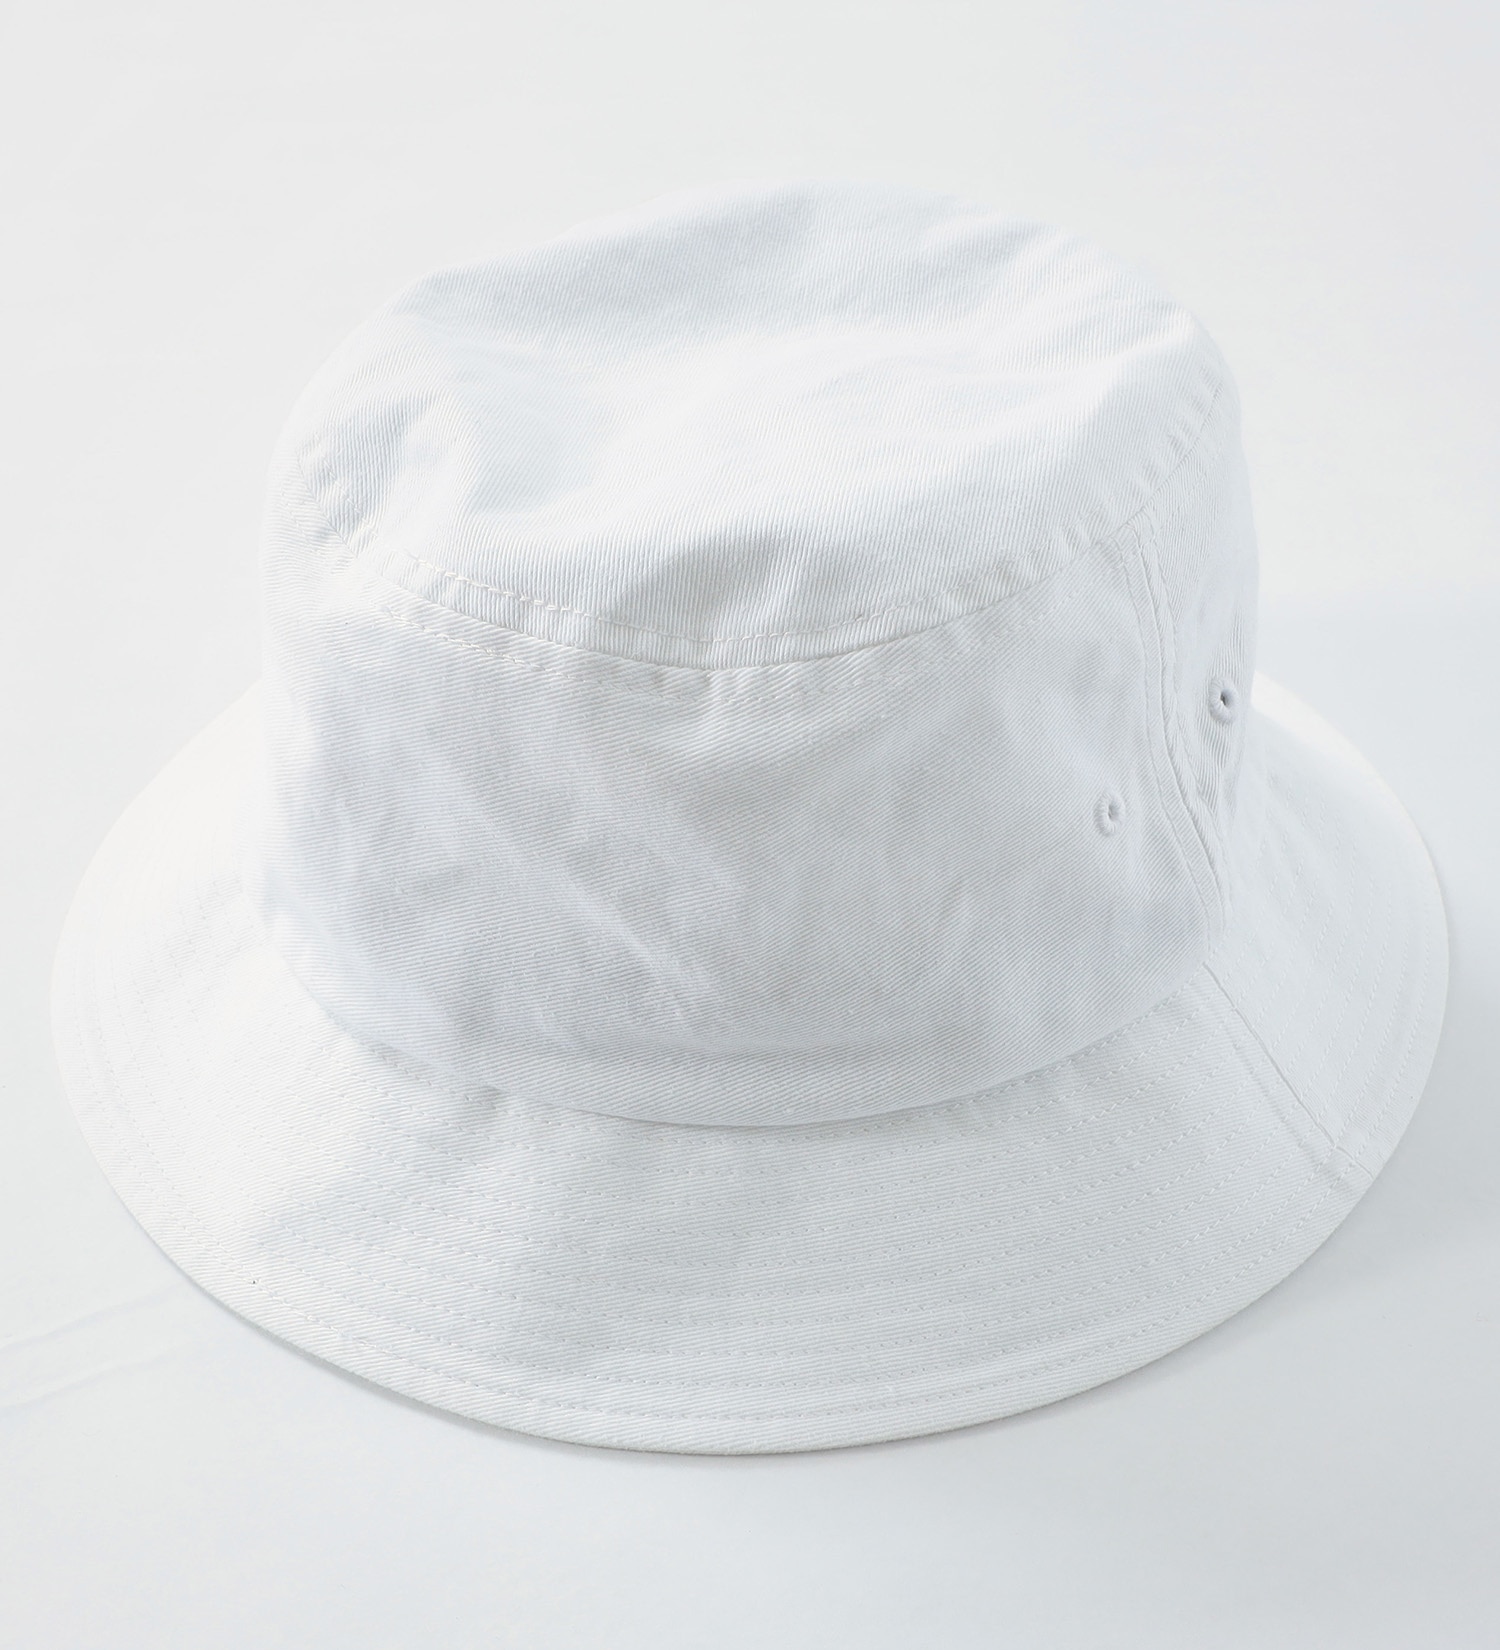 Lee(リー)の【Lee GOLF】バケットハット|帽子/ハット/メンズ|ホワイト